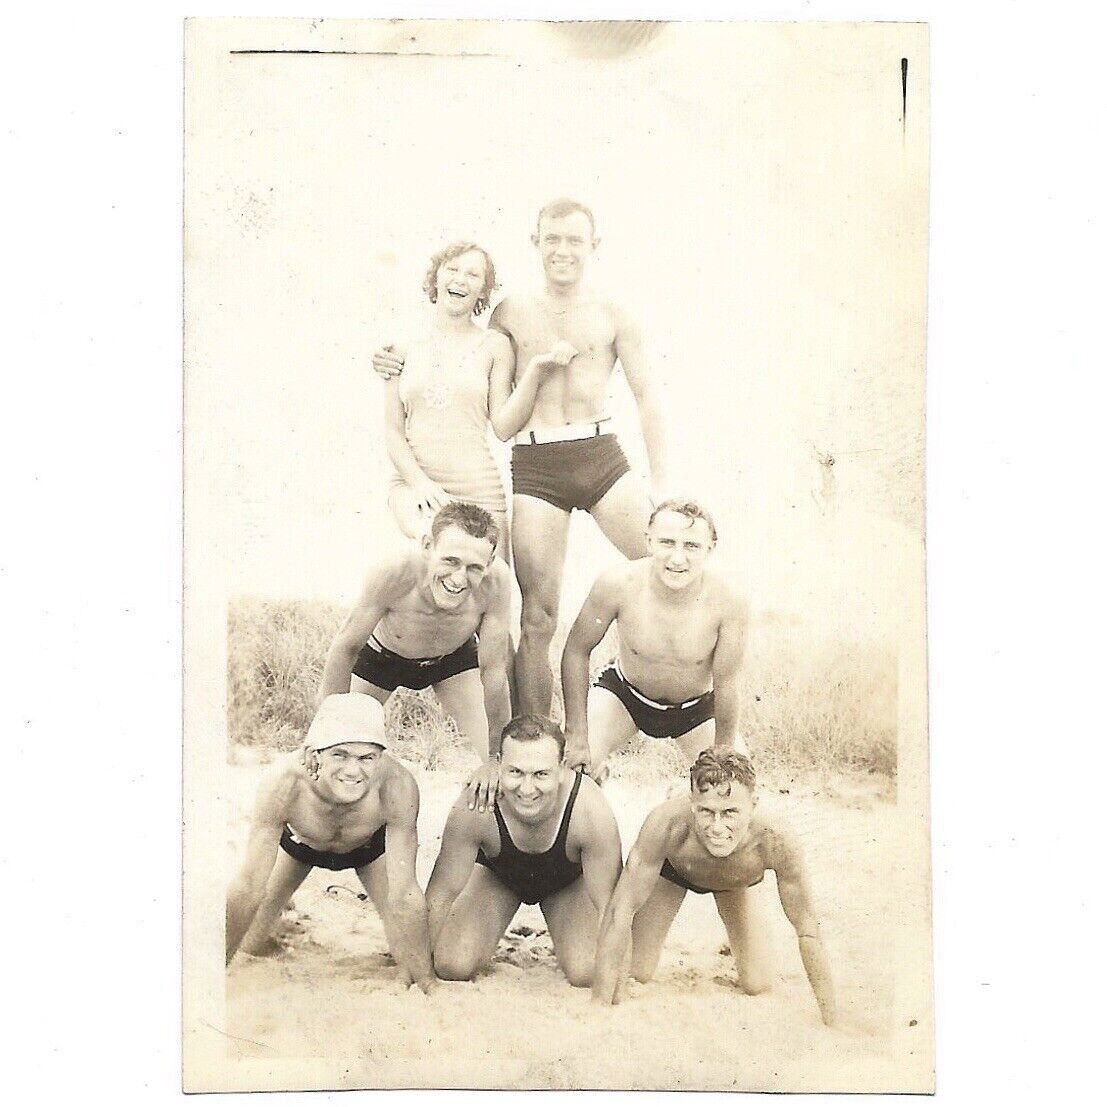 Shirtless Army Men Human Pyramid Beach WWII Era Vintage Photo Abs Gay Interest